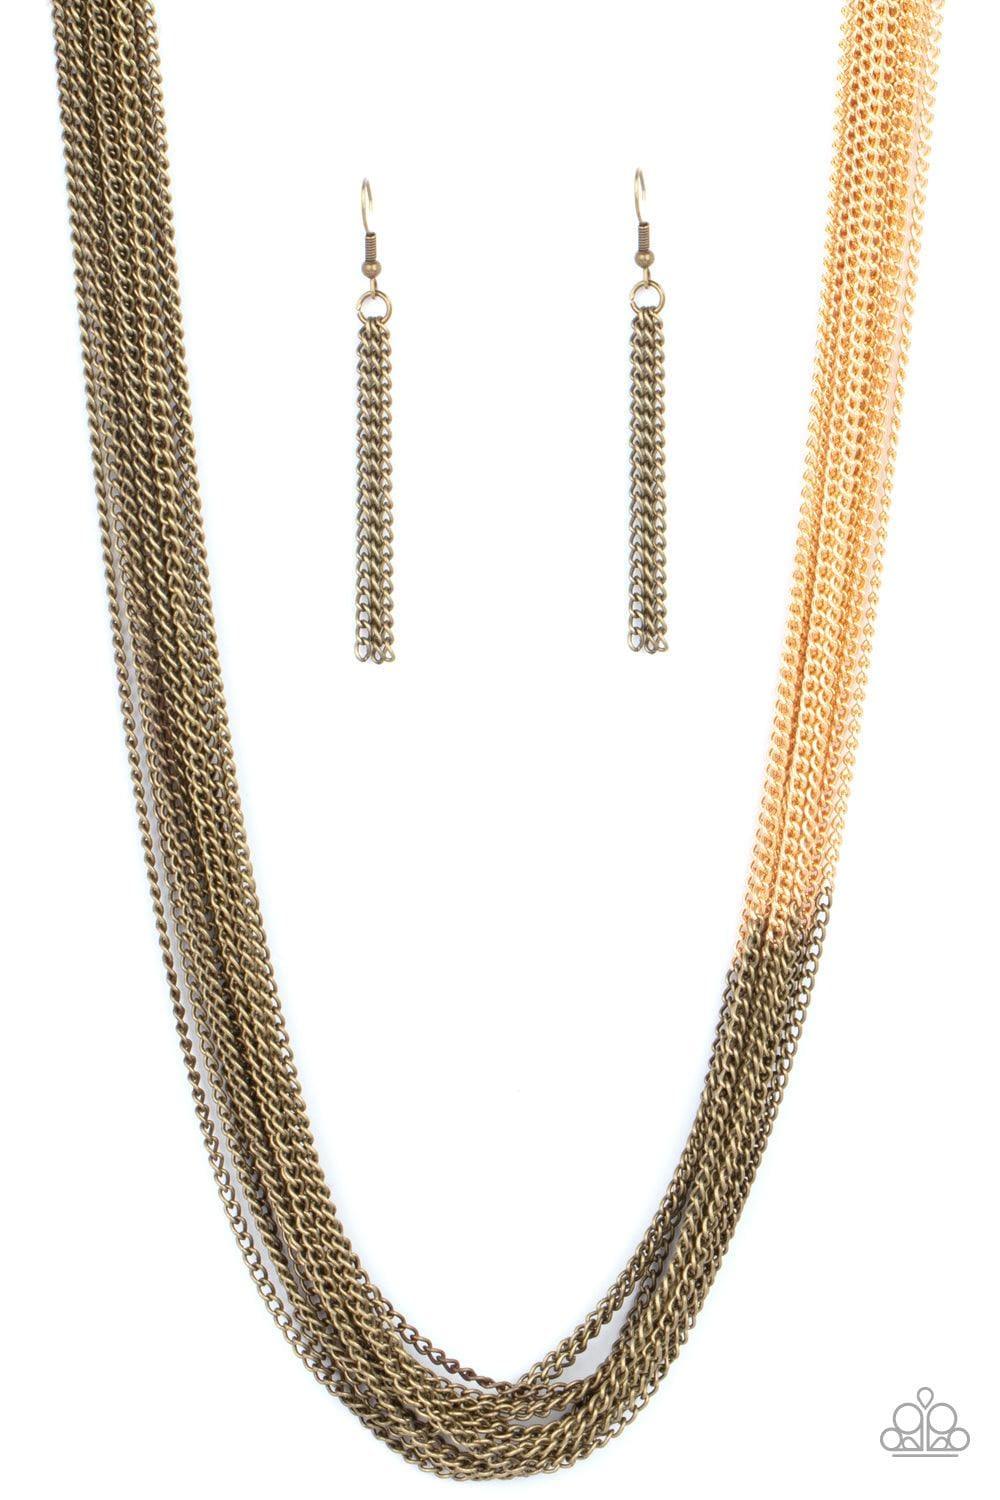 Paparazzi Accessories - Metallic Merger - Brass Necklace - Bling by JessieK